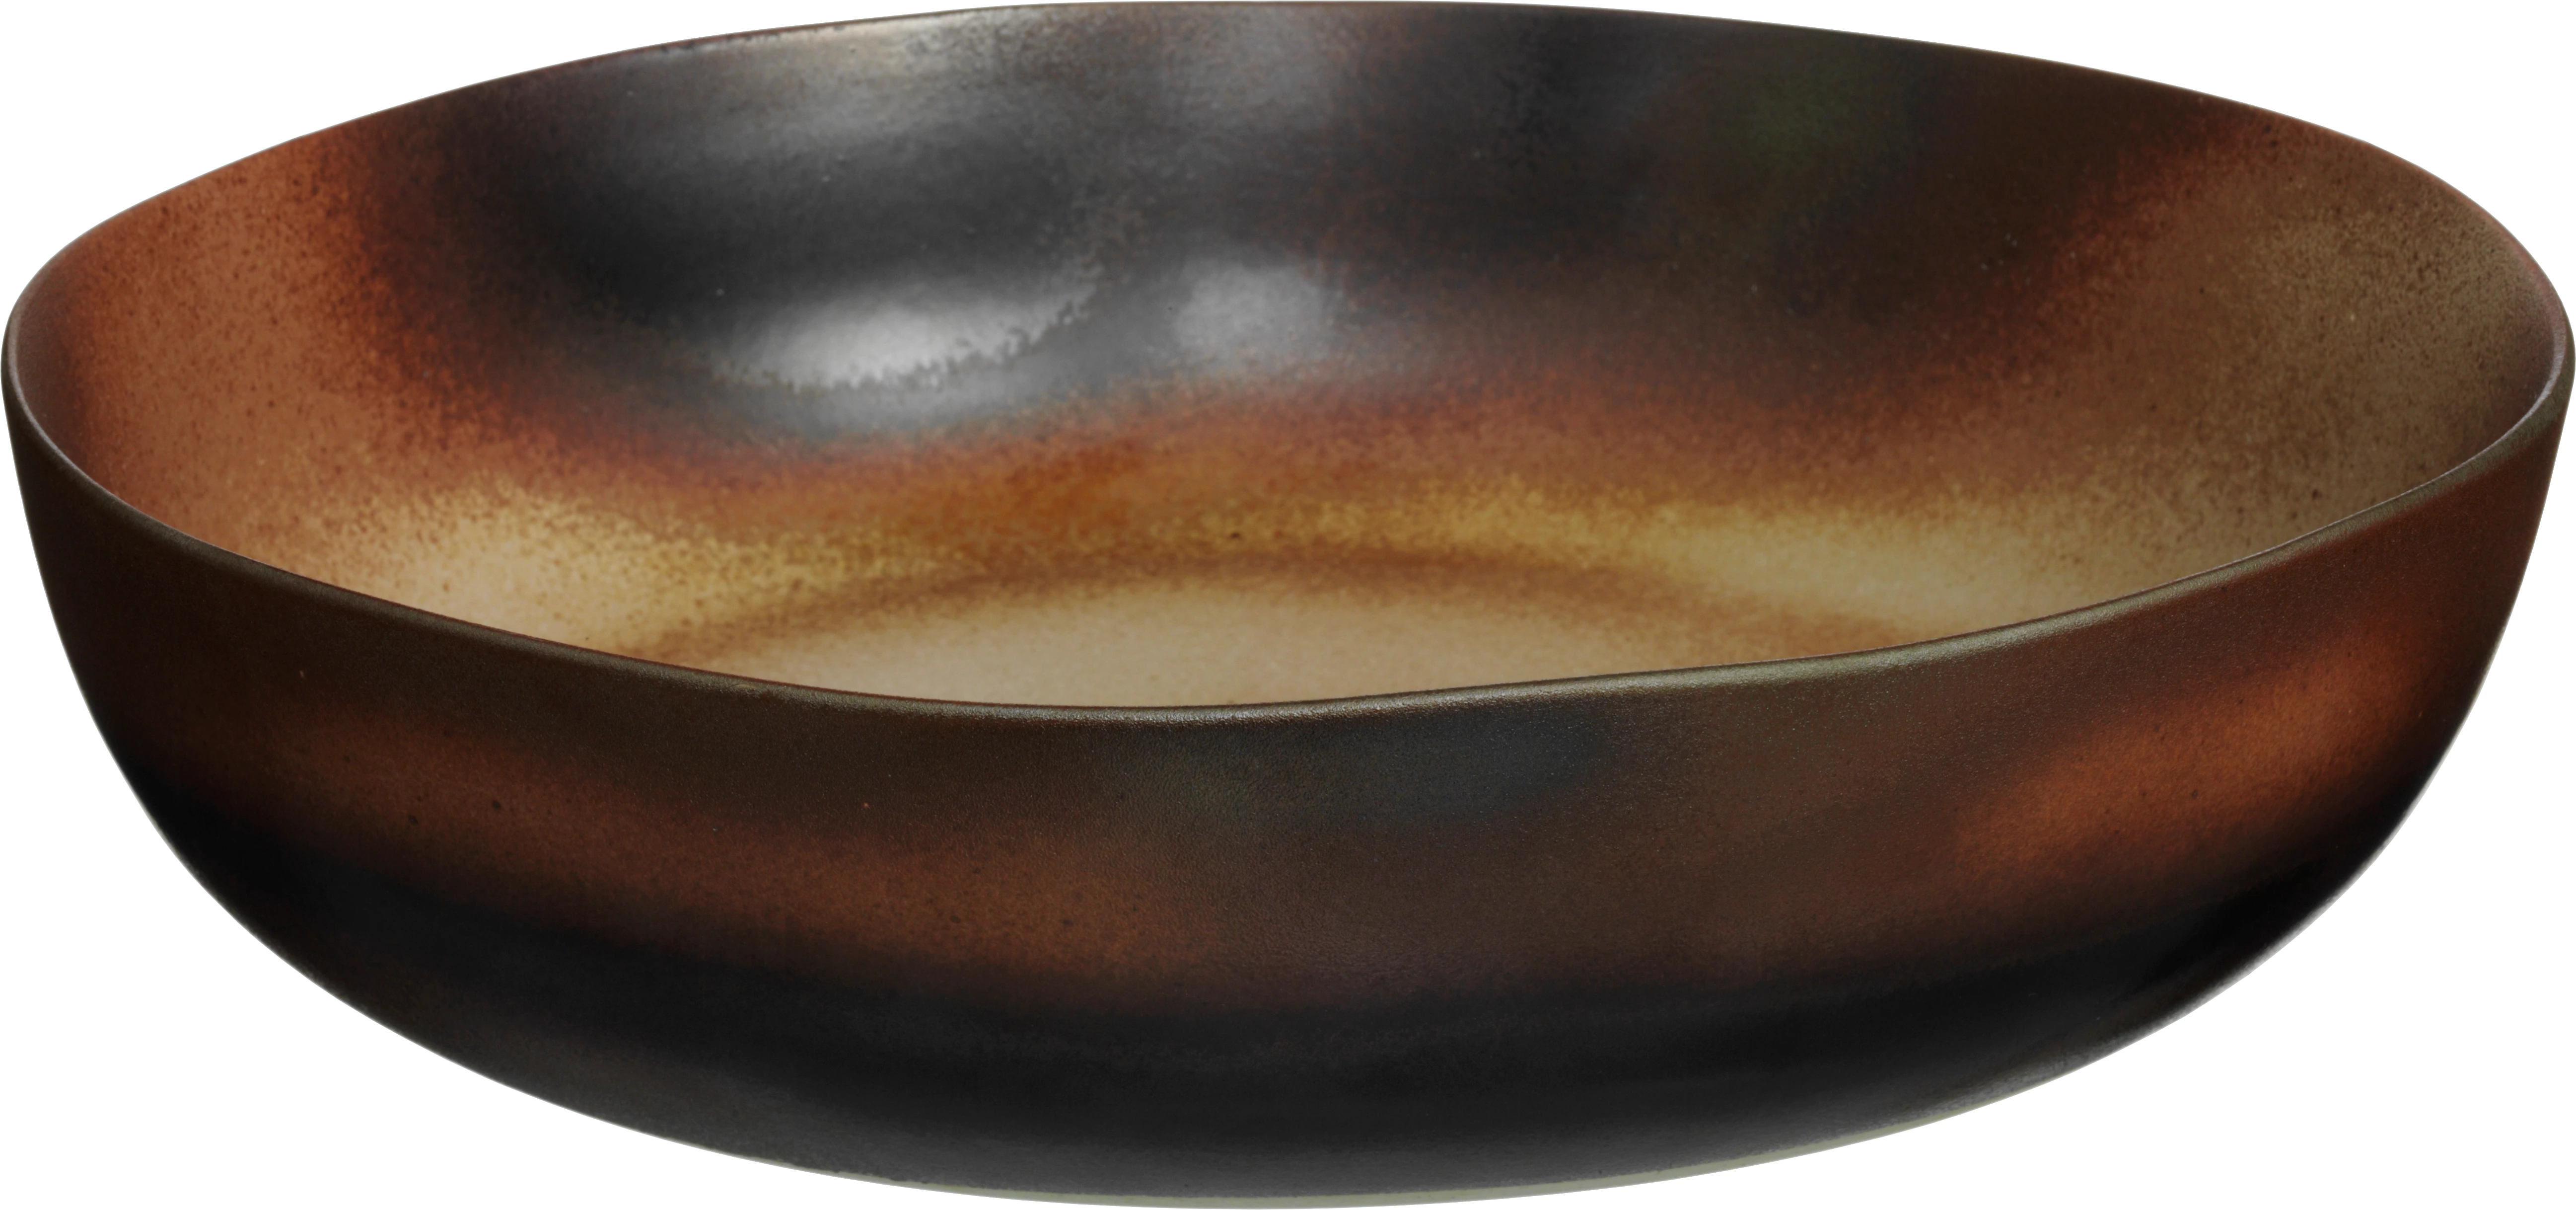 Nordlys skål, brun, 350 cl, ø33 cm